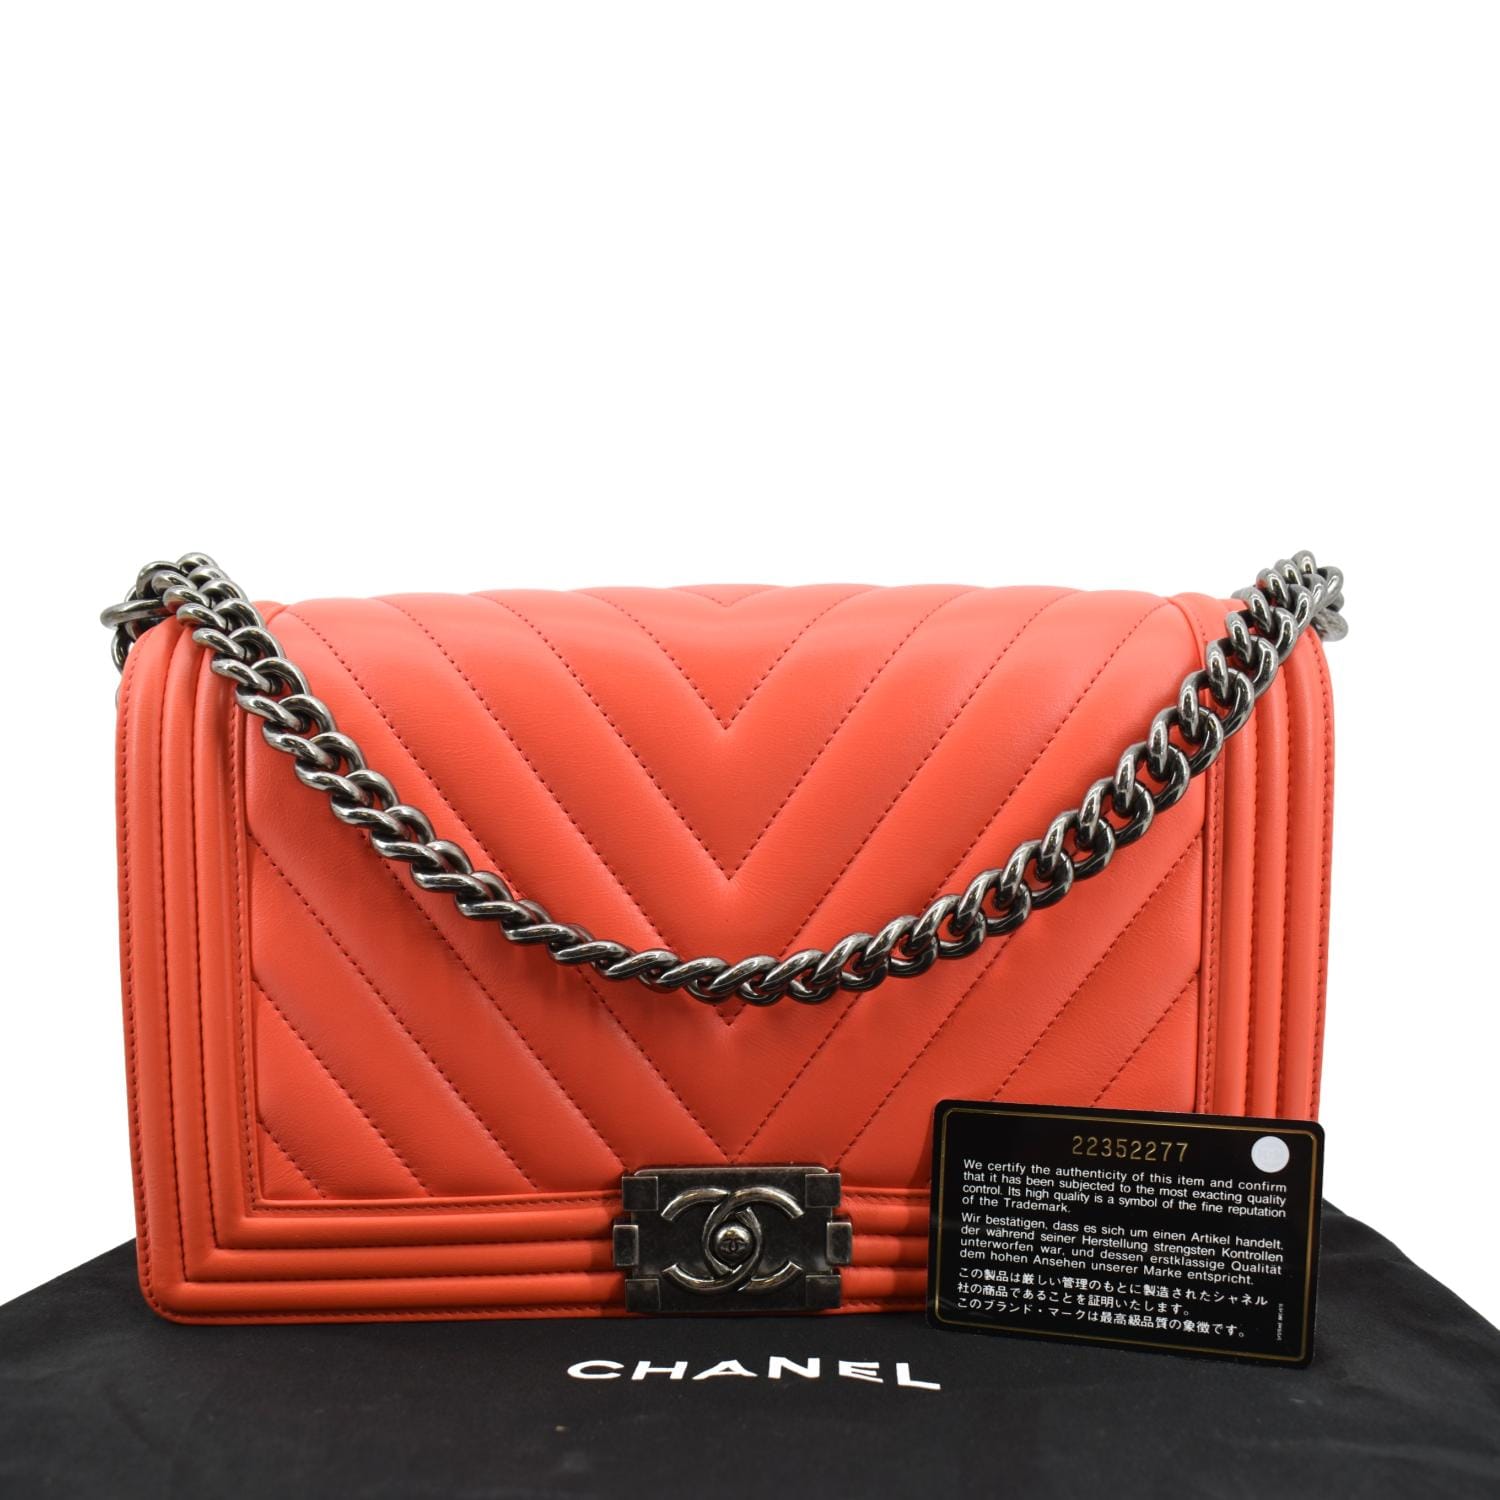 chanel purses ebay